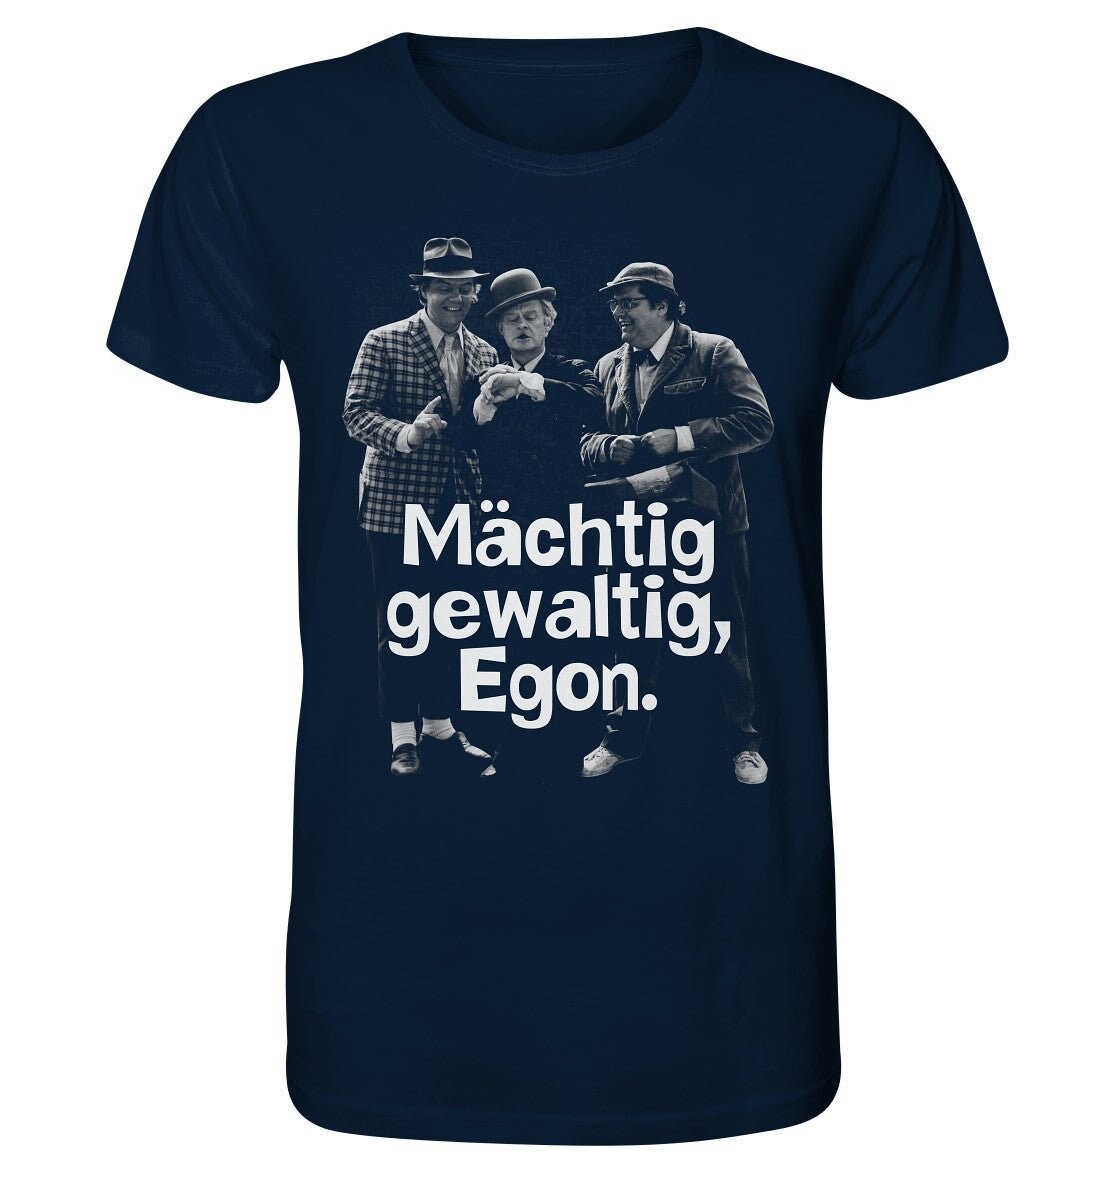 Mighty Egon. organic Shirt - Etsy